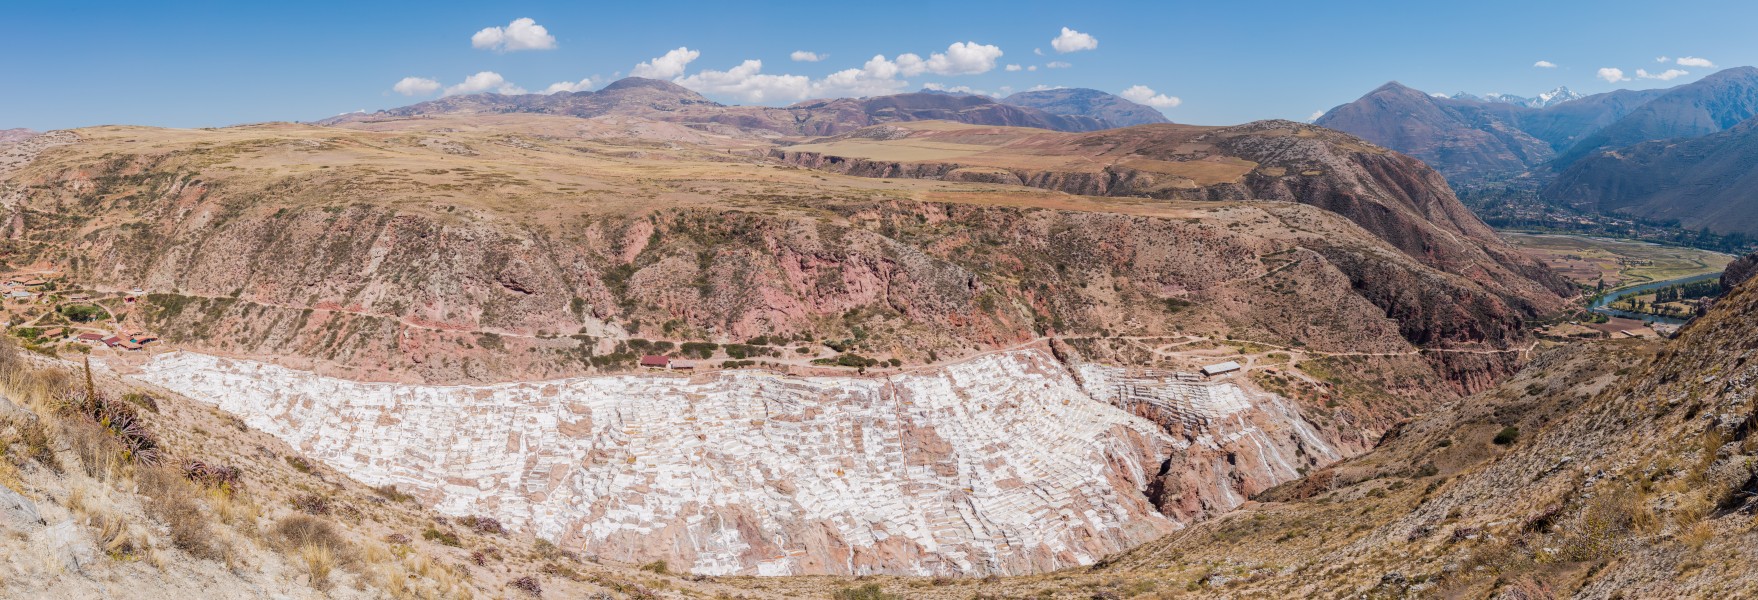 Salineras de Maras, Maras, Perú, 2015-07-30, DD 03-07 PAN